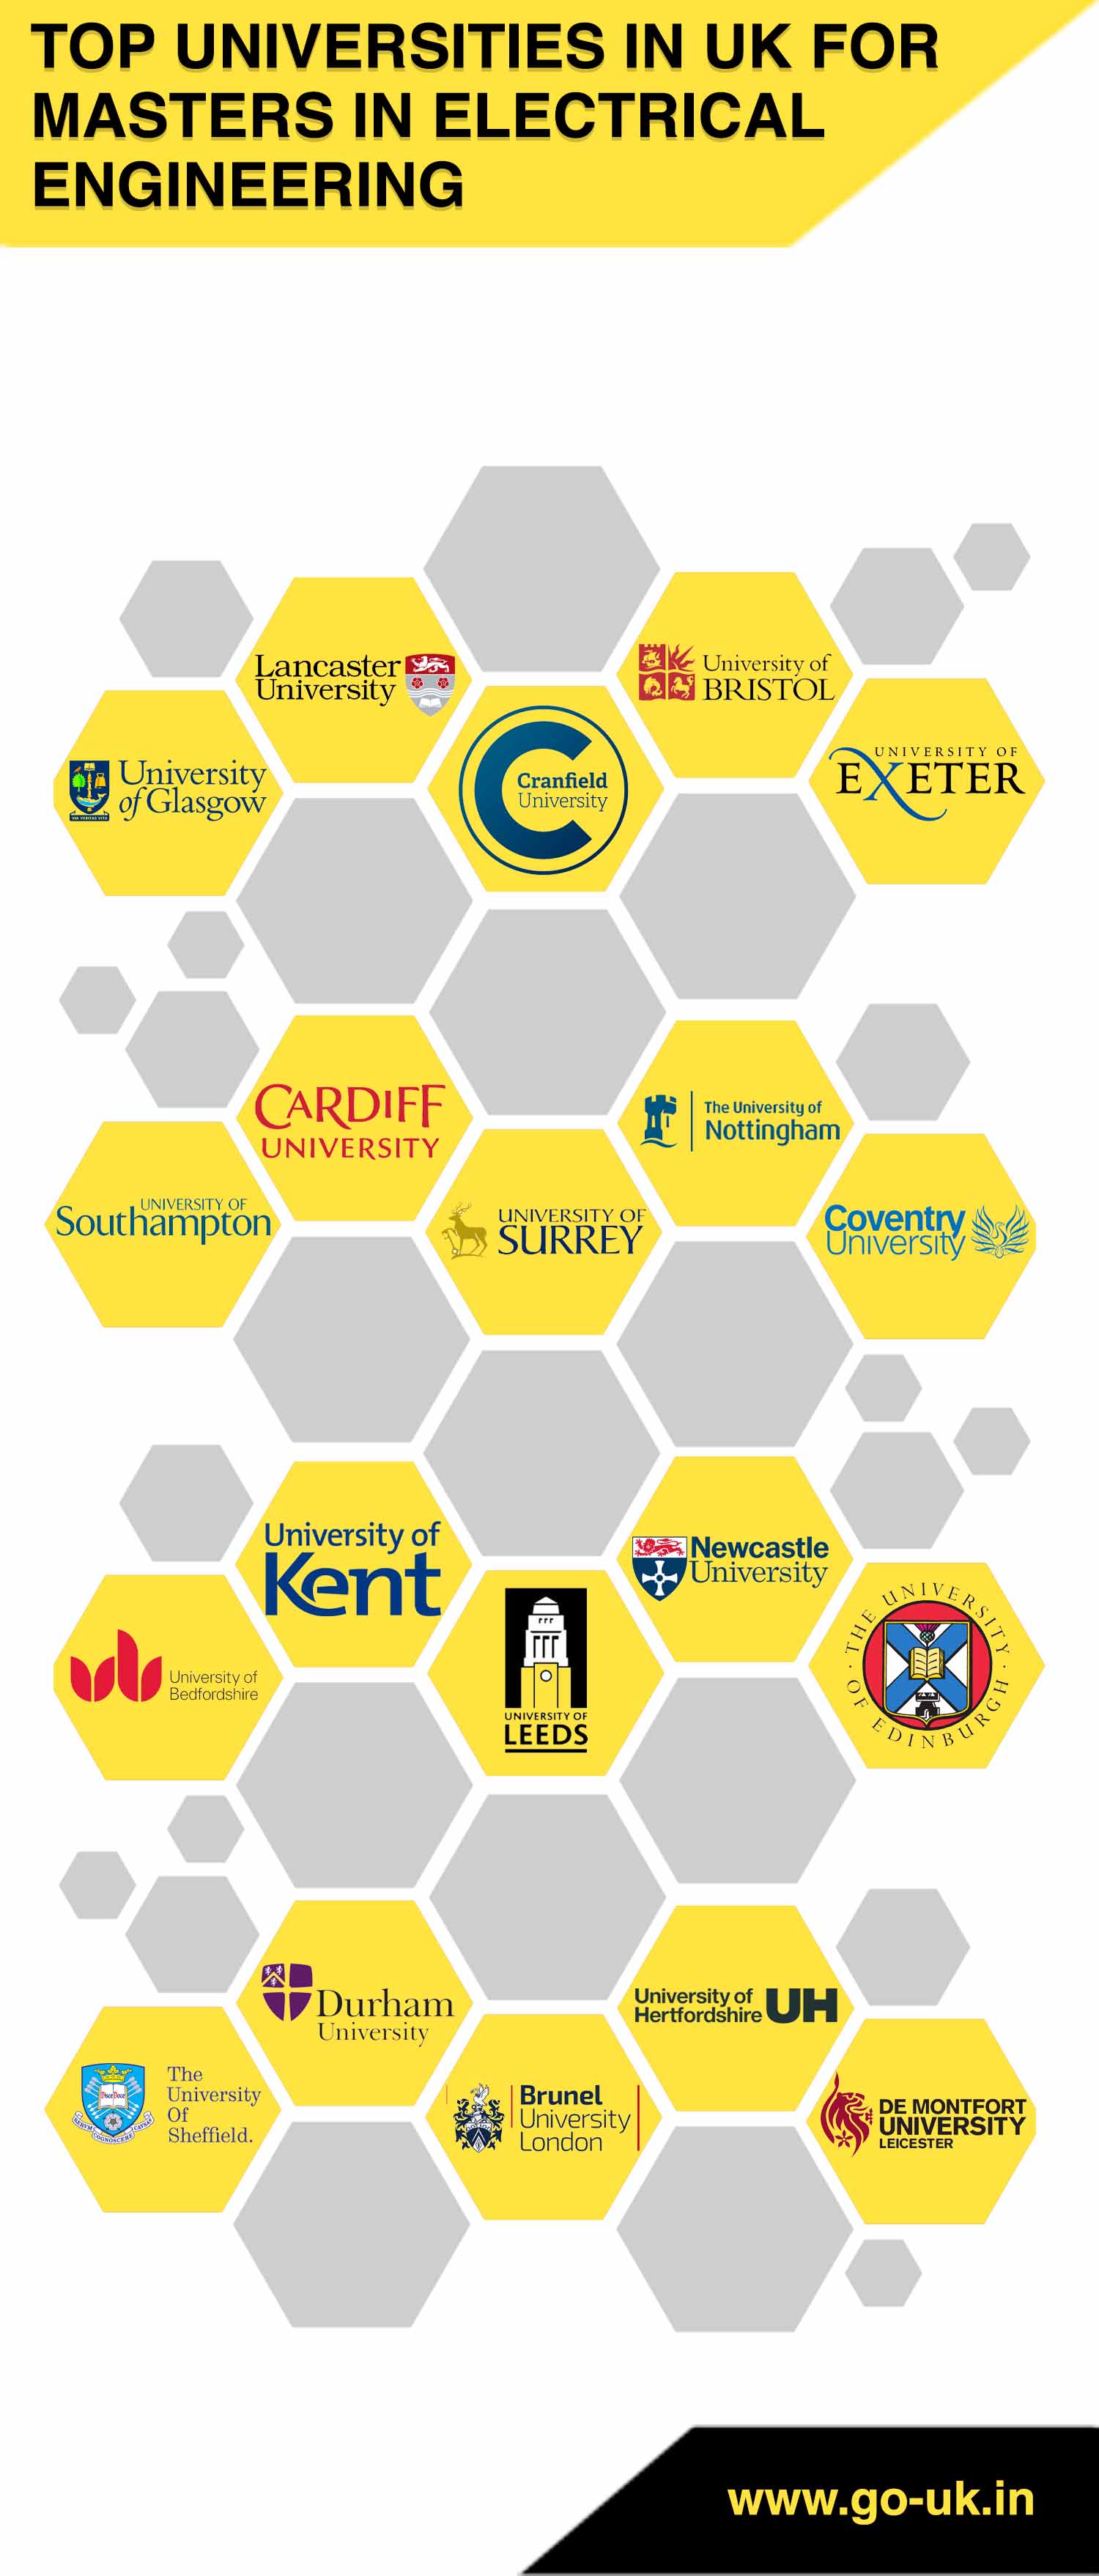 Top Universities in UK for Masters in Electrical Engineering